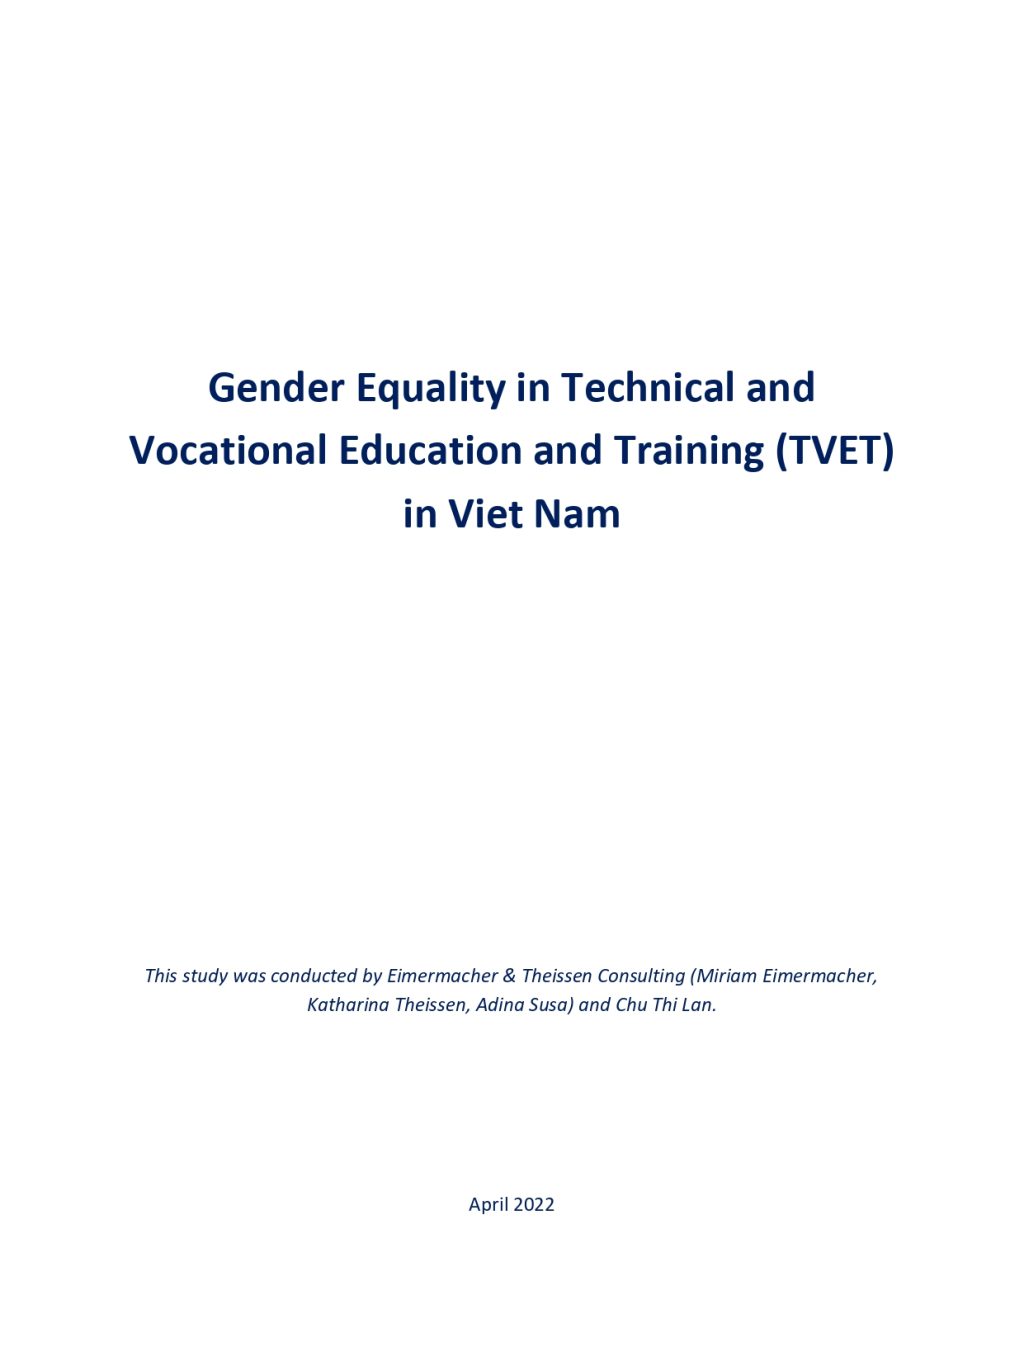 220706 CTL Gender_TVET_Viet Nam_EN_page-0001